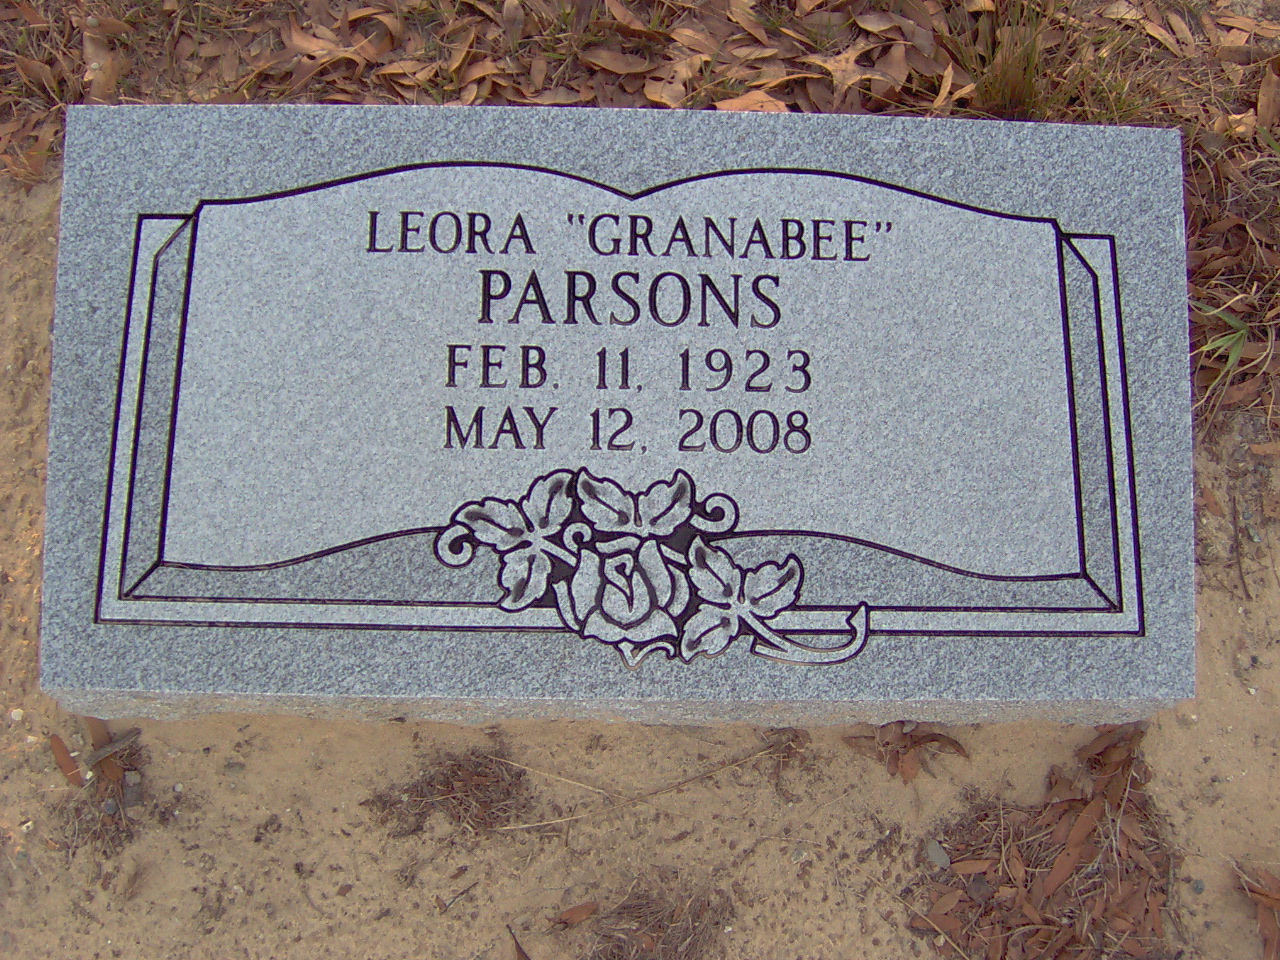 Headstone for Parsons, Leora